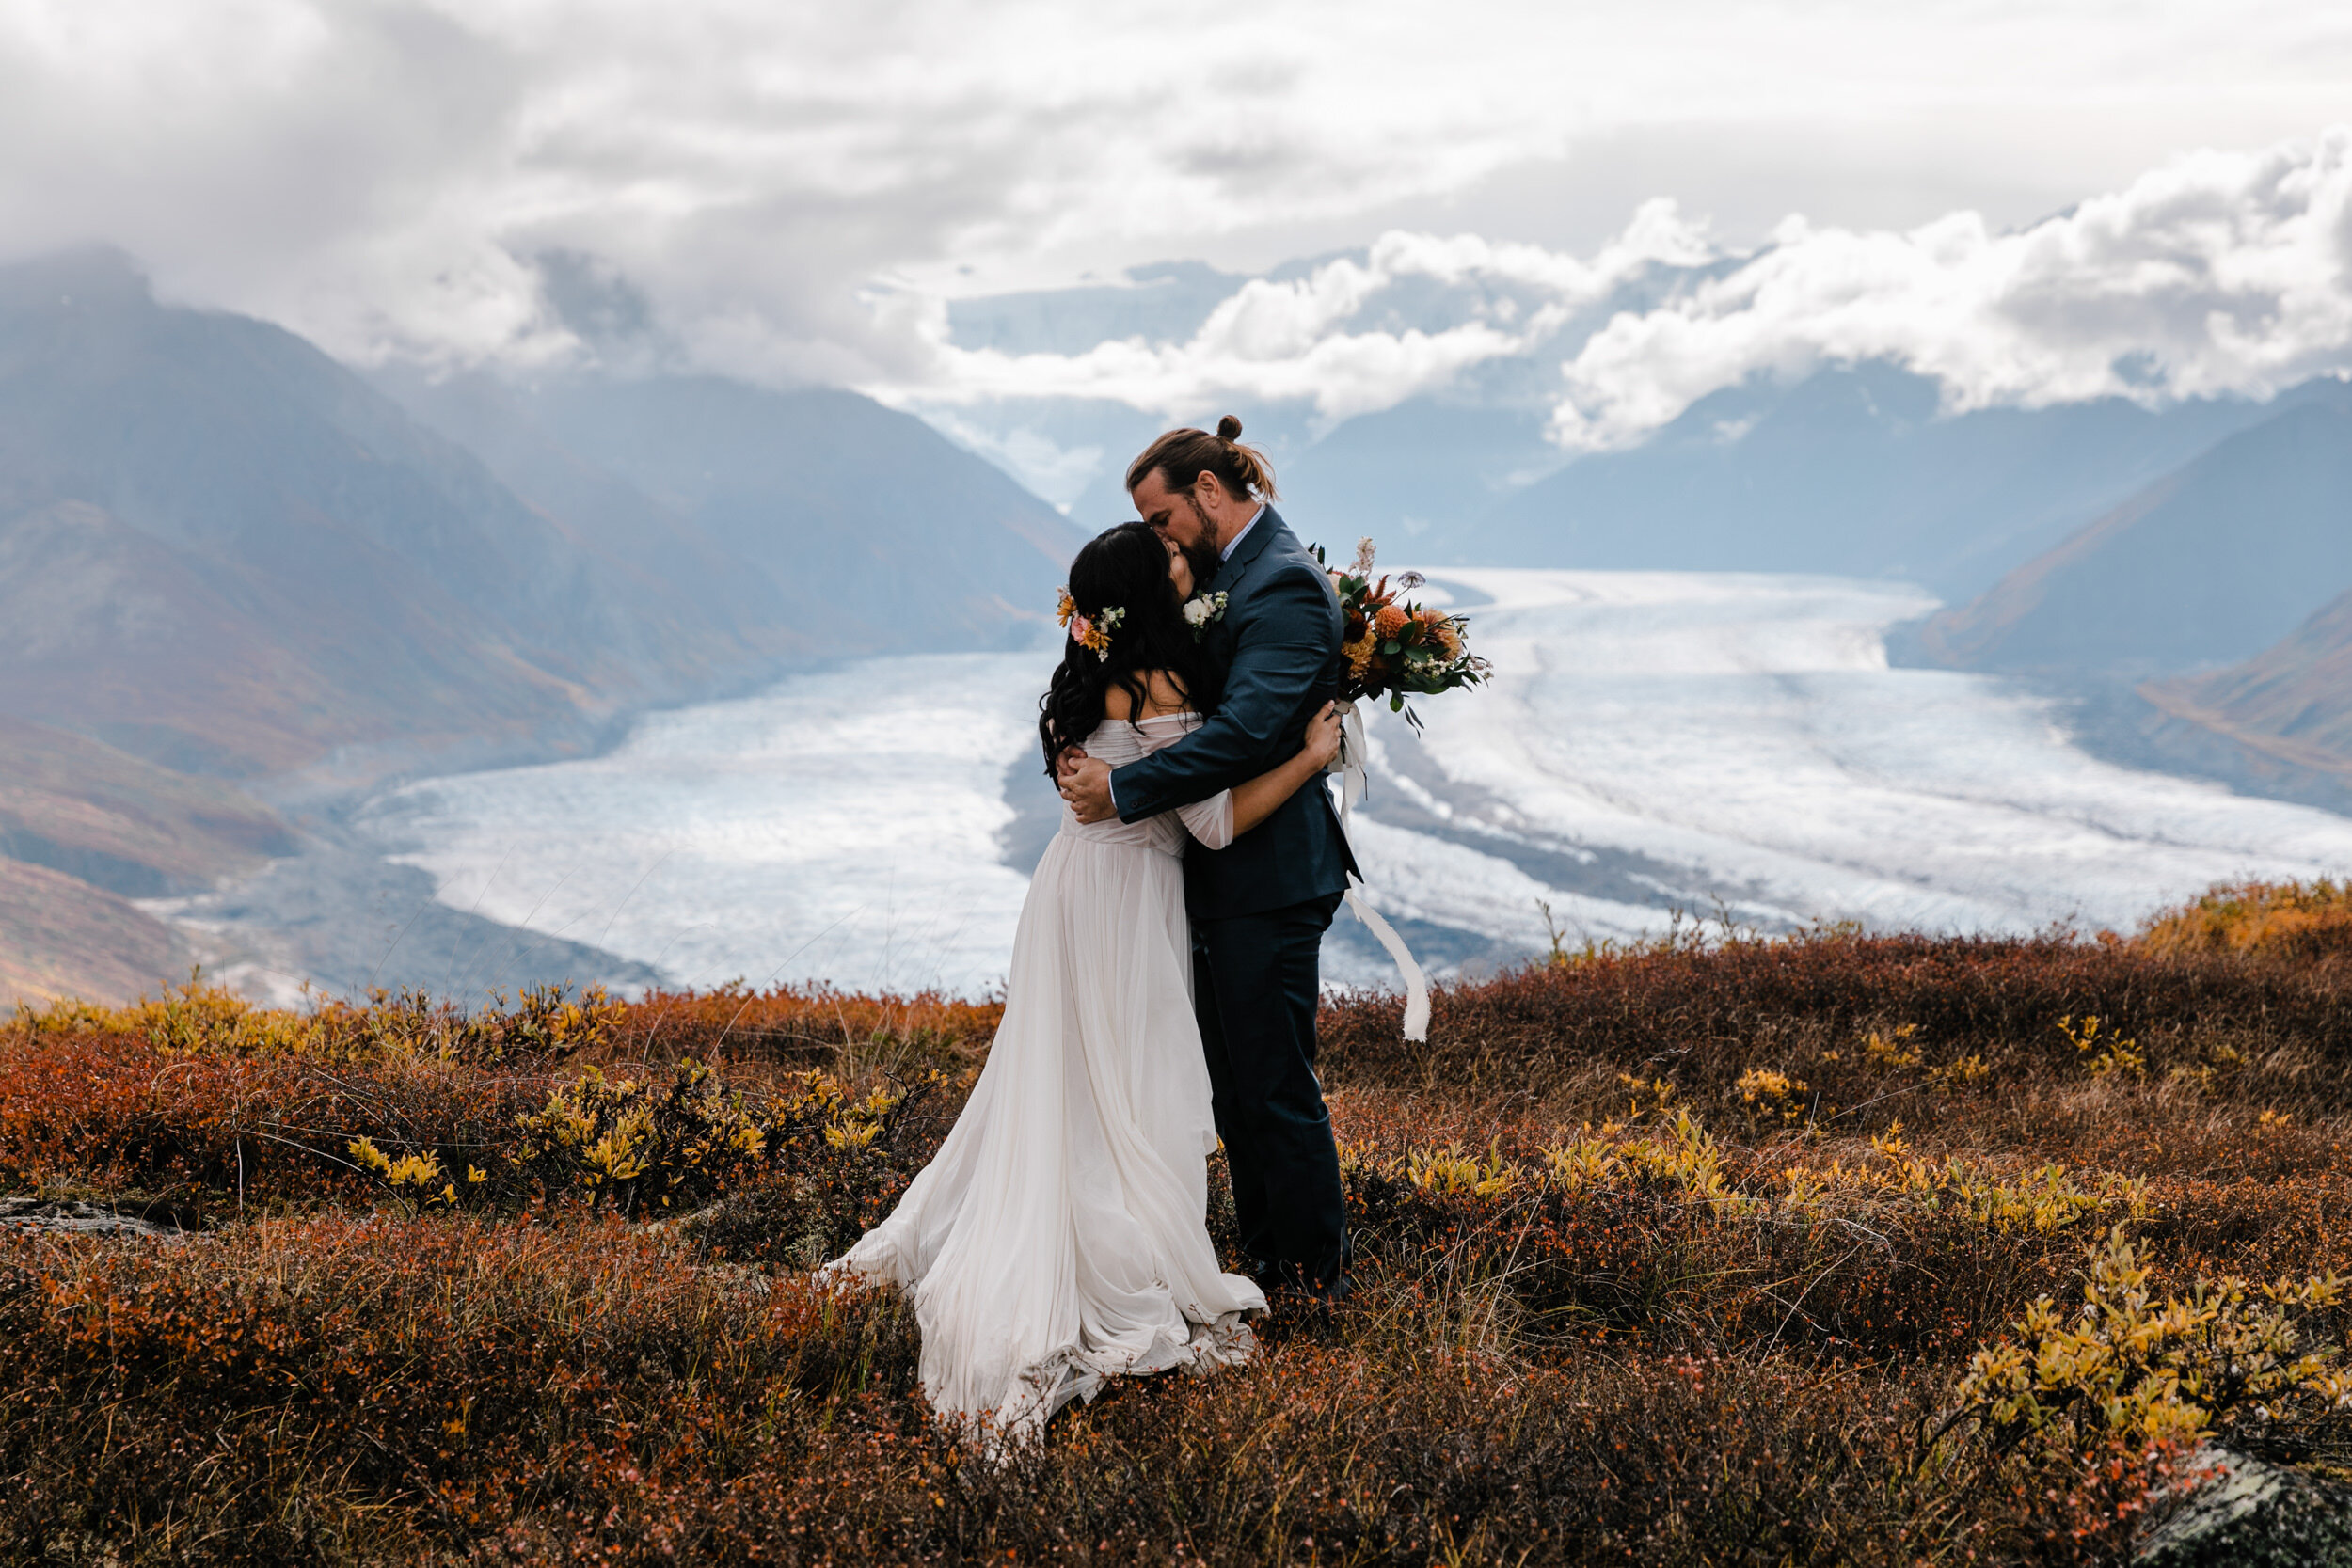 Alaska Elopement | Fall Adventure Wedding Inspiration | The Hearnes Photography